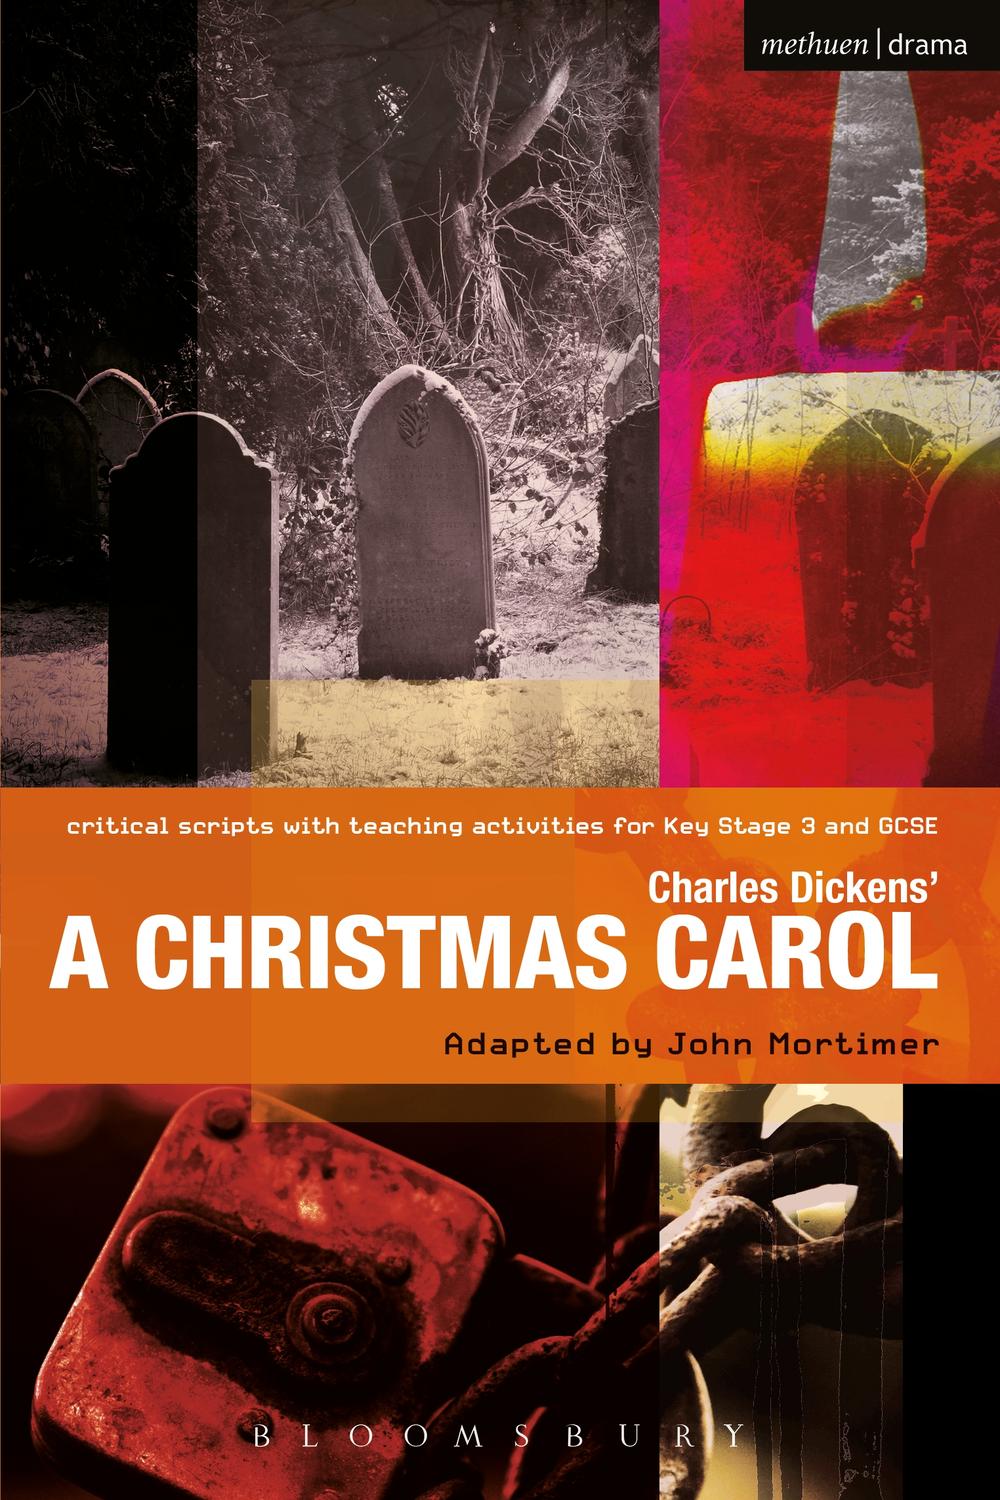 Charles Dickens' A Christmas Carol - Charles Dickens, John Mortimer,Paul Bunyan, Ruth Moore,